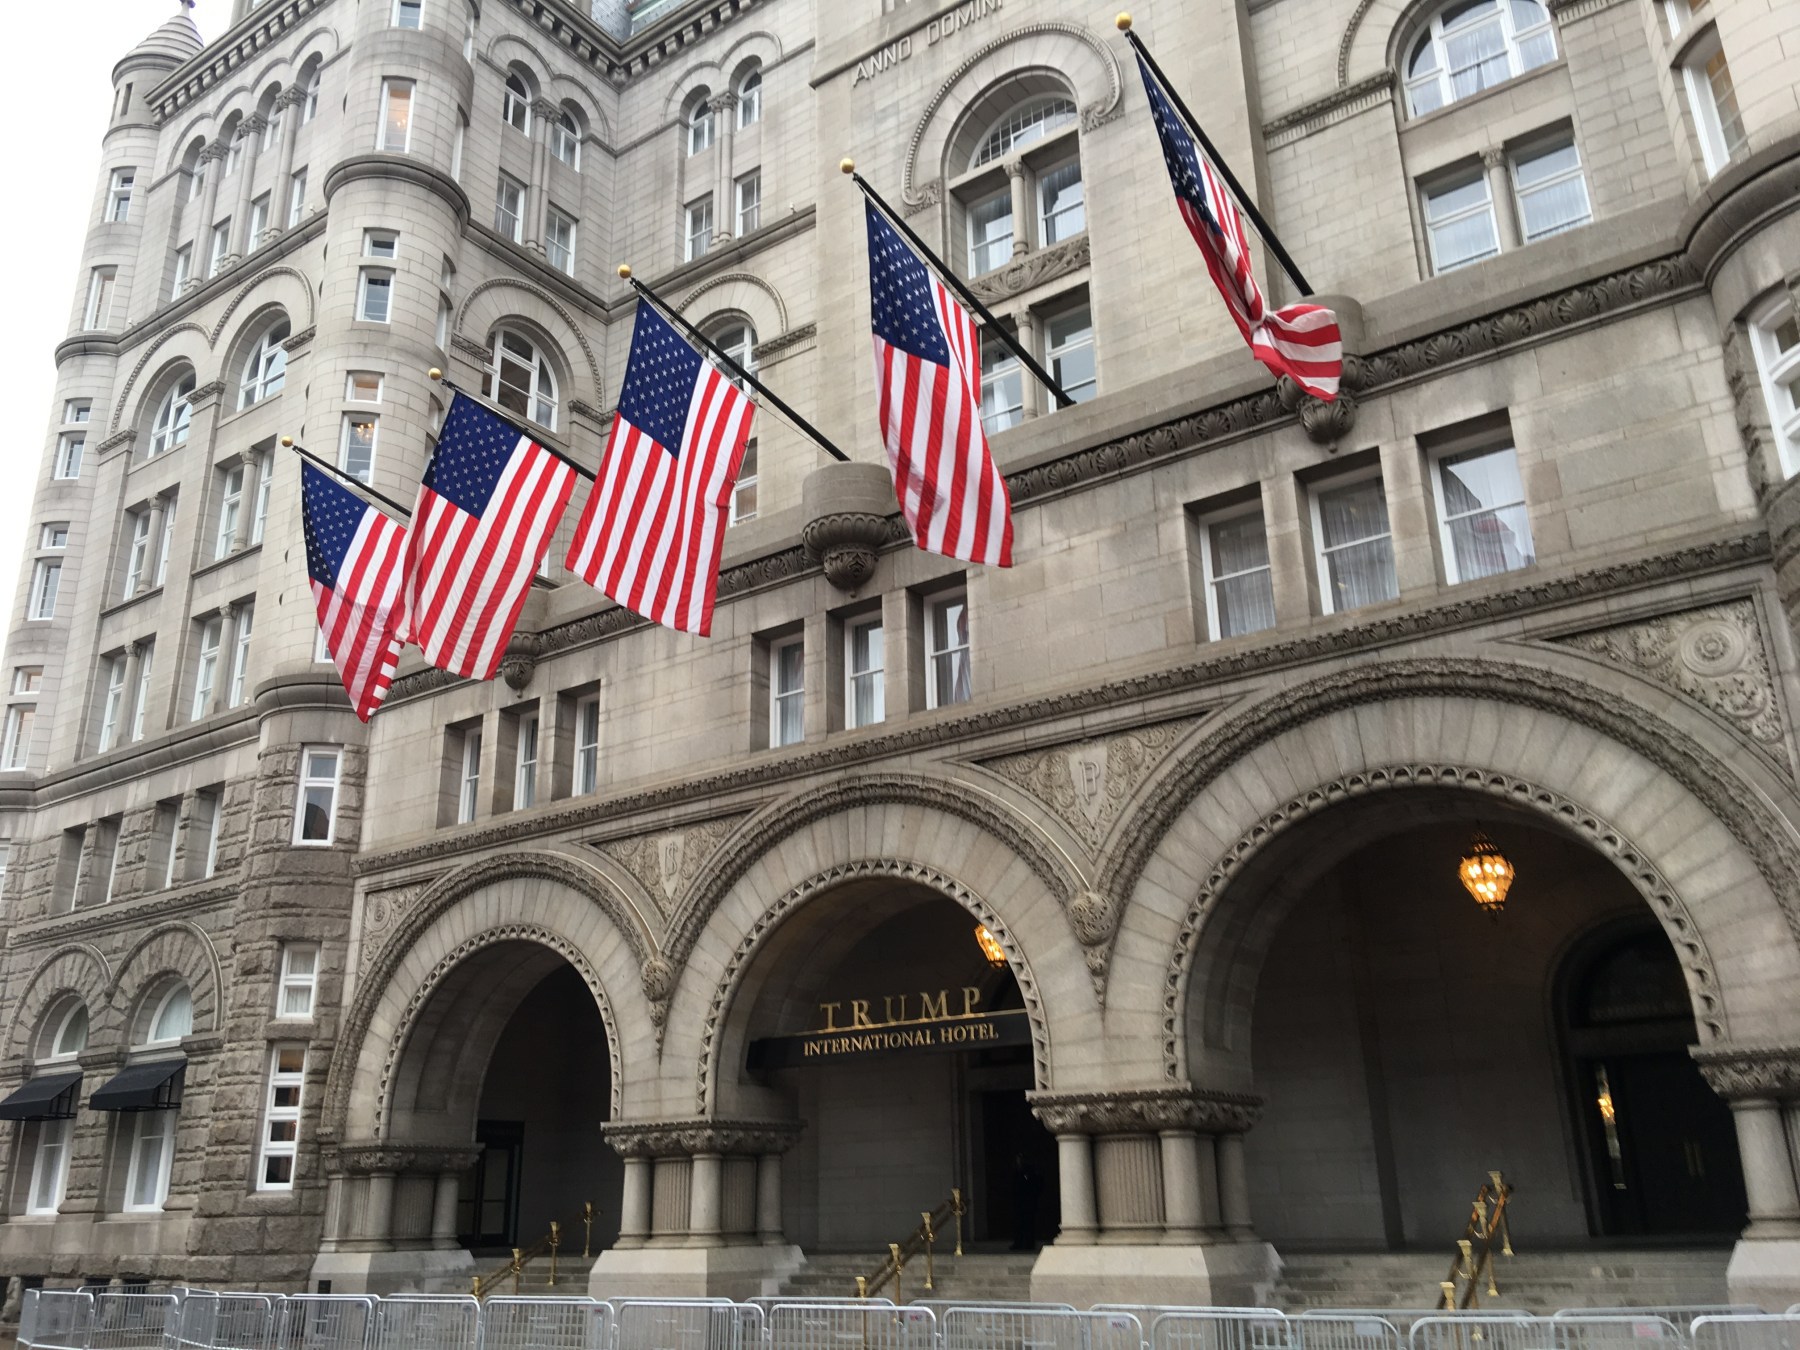 Trump International Hotel in Washington, DC